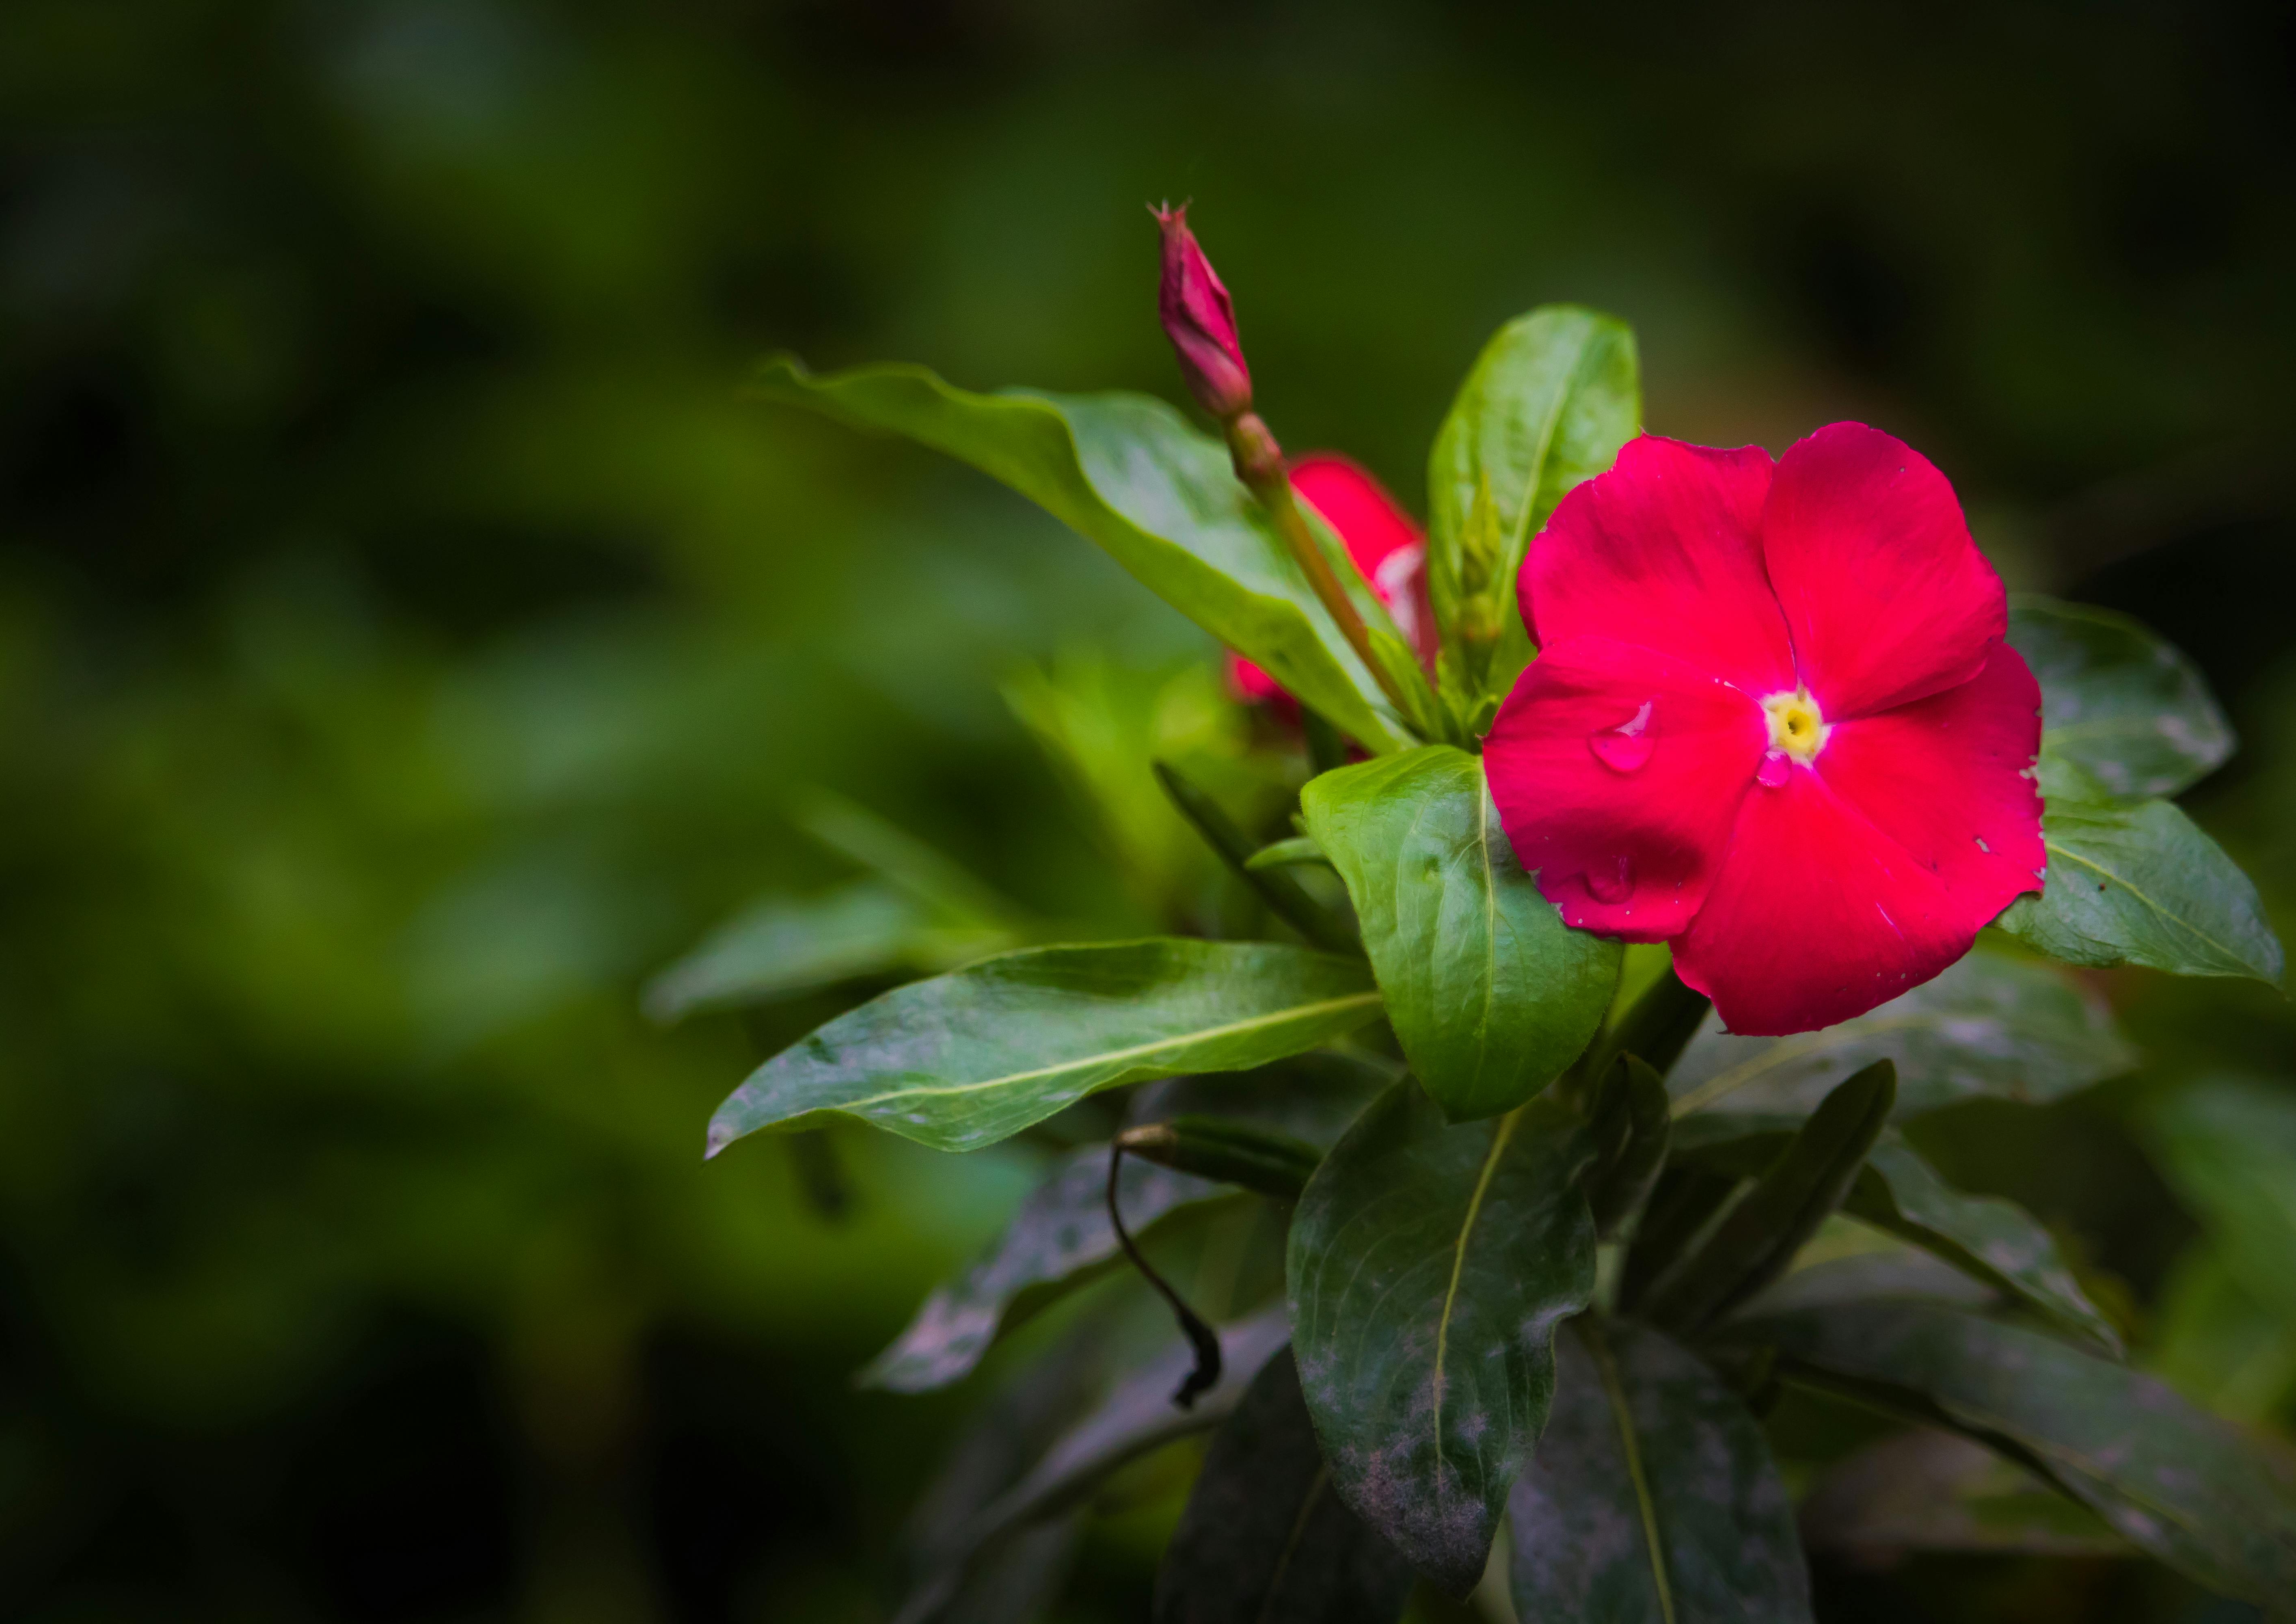 Free stock photo of minimalism or minimalist, Red flower with rain drop